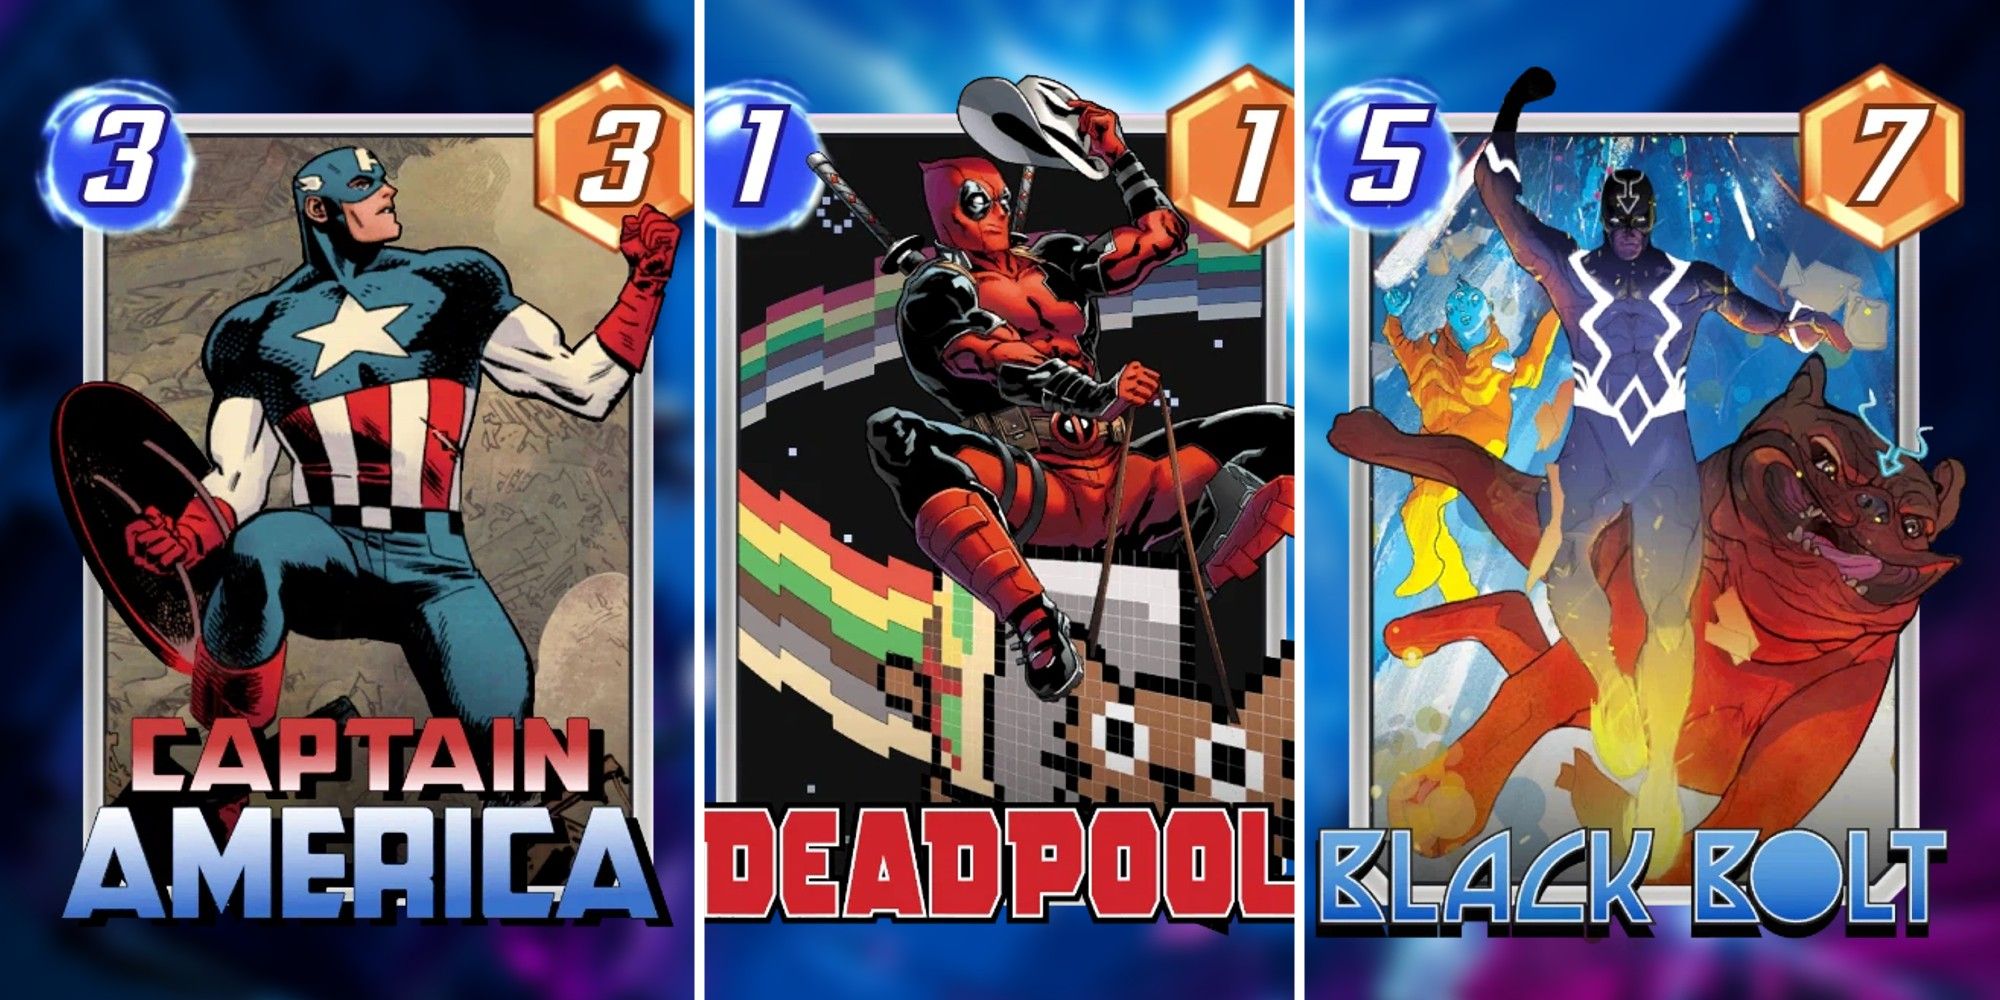 Vision - Marvel Snap Cards